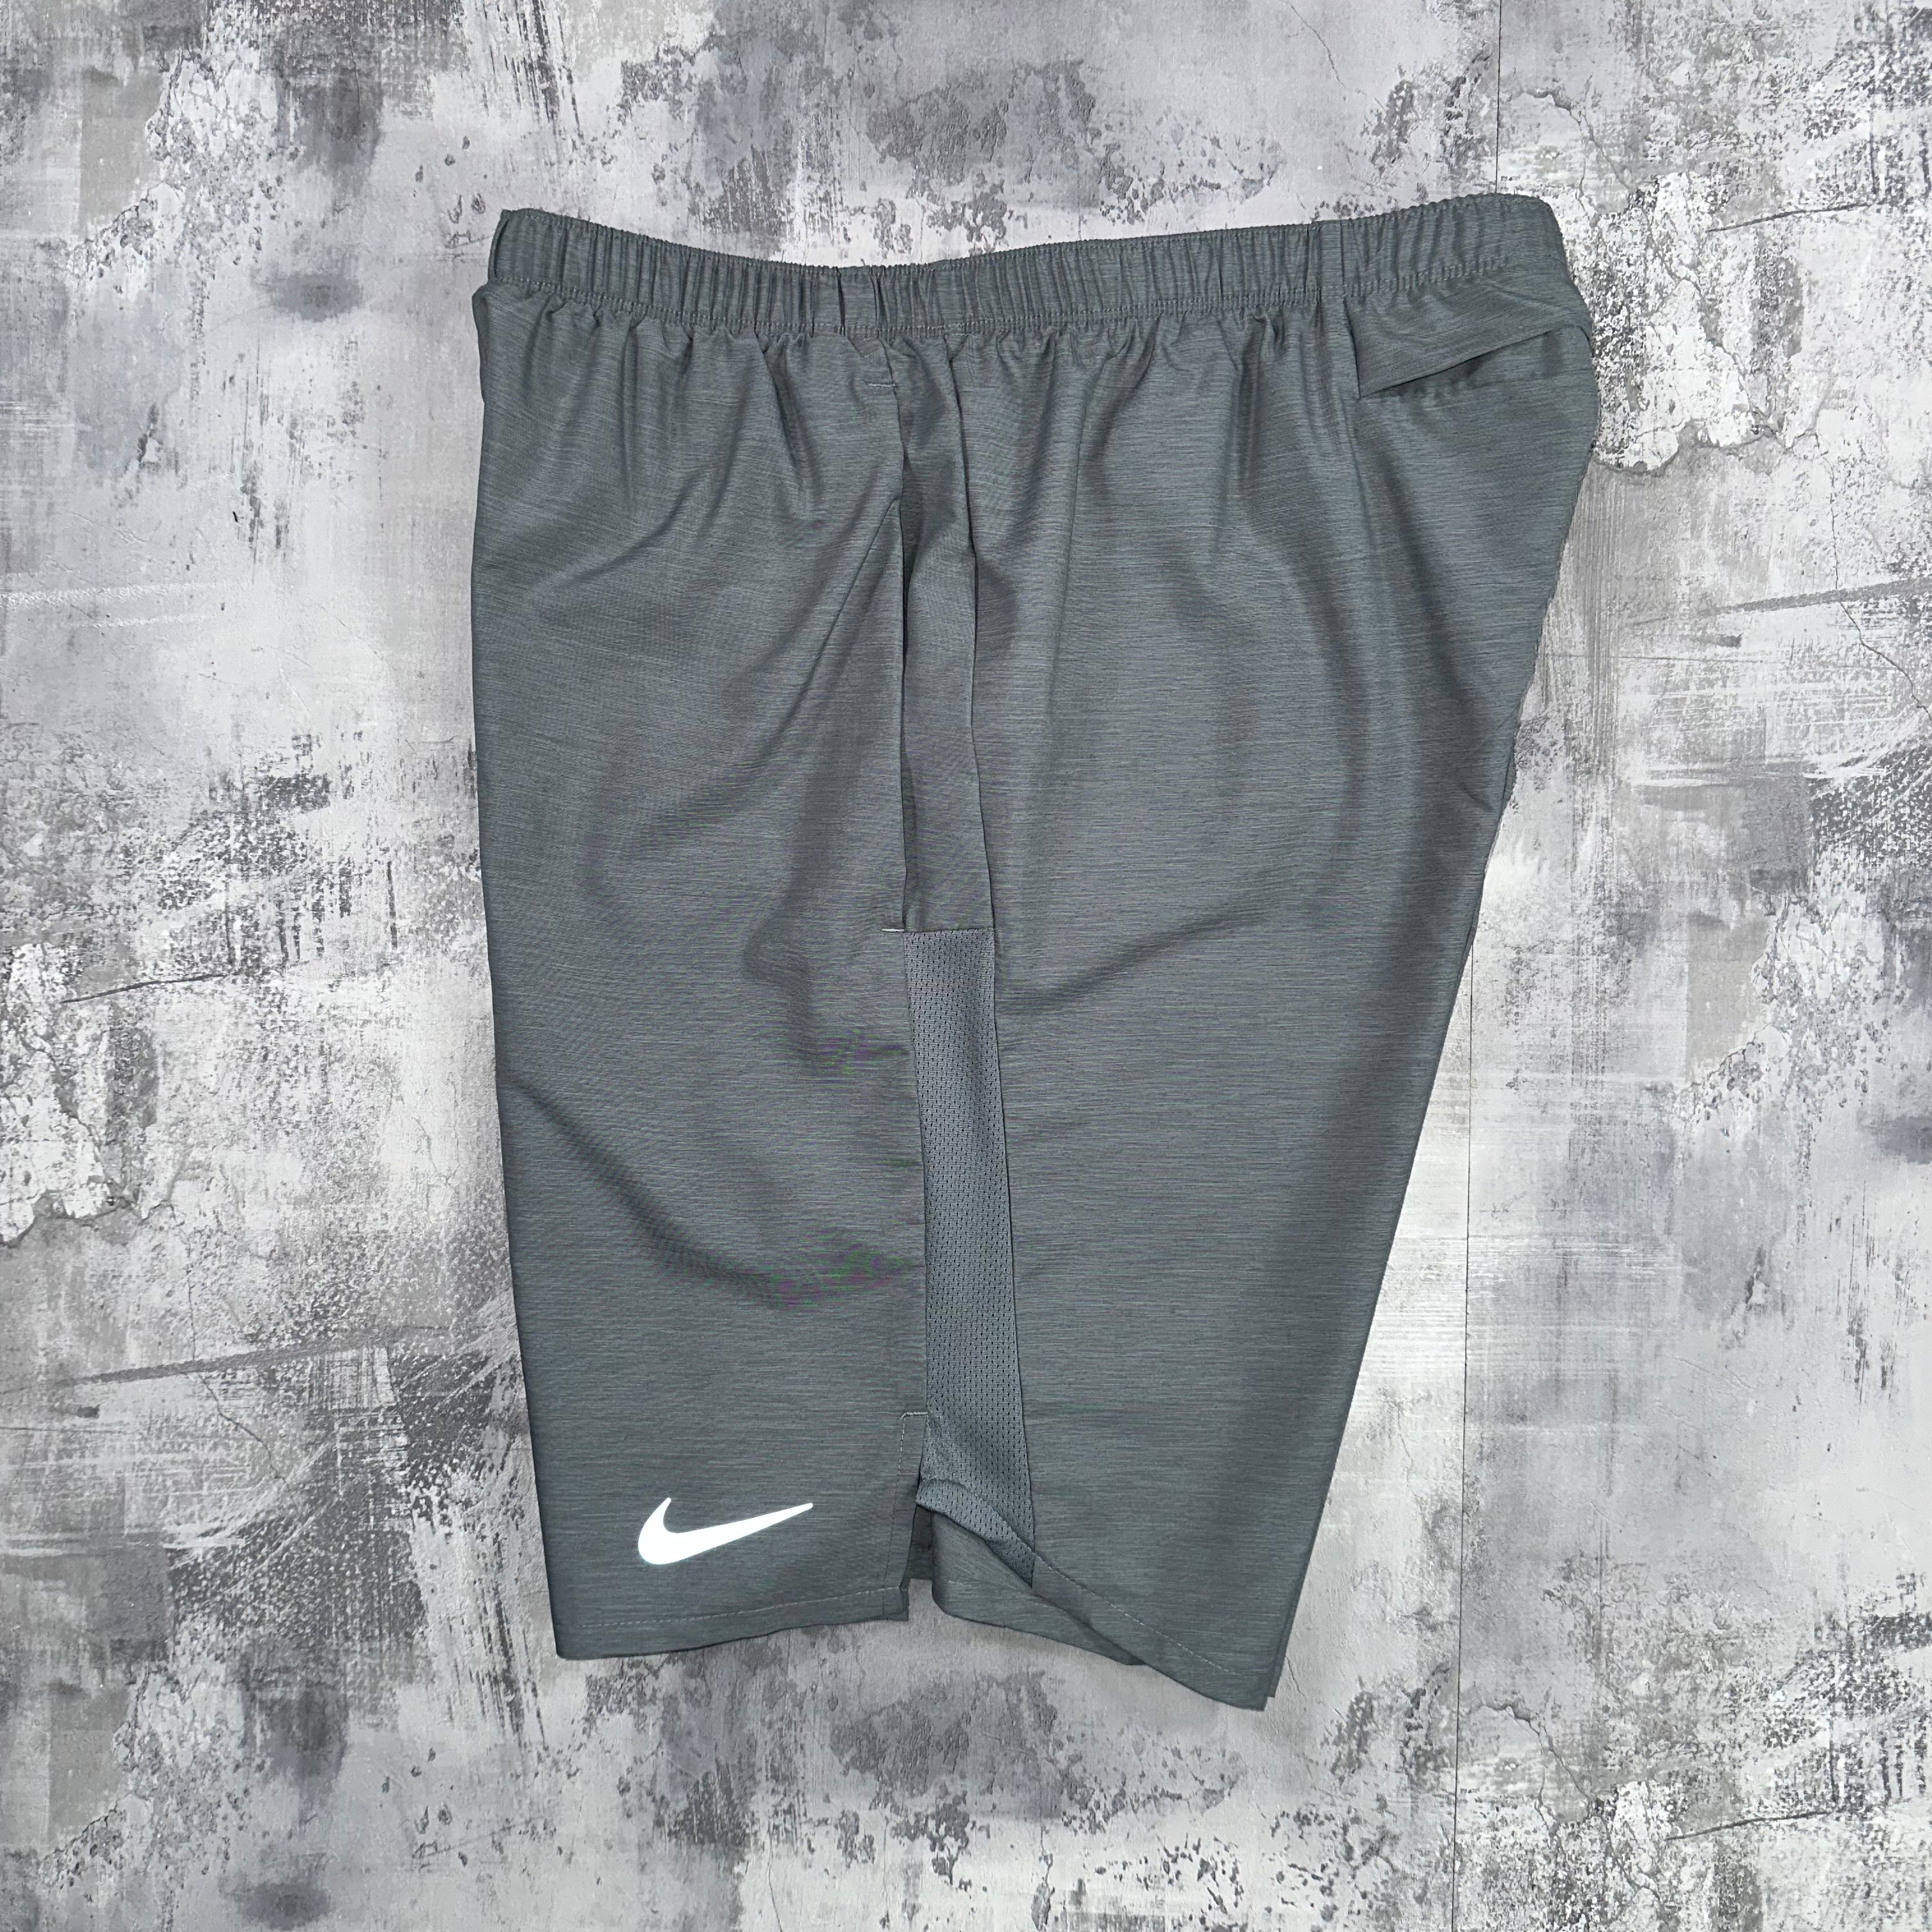 Nike Challenger shorts Smoke Grey